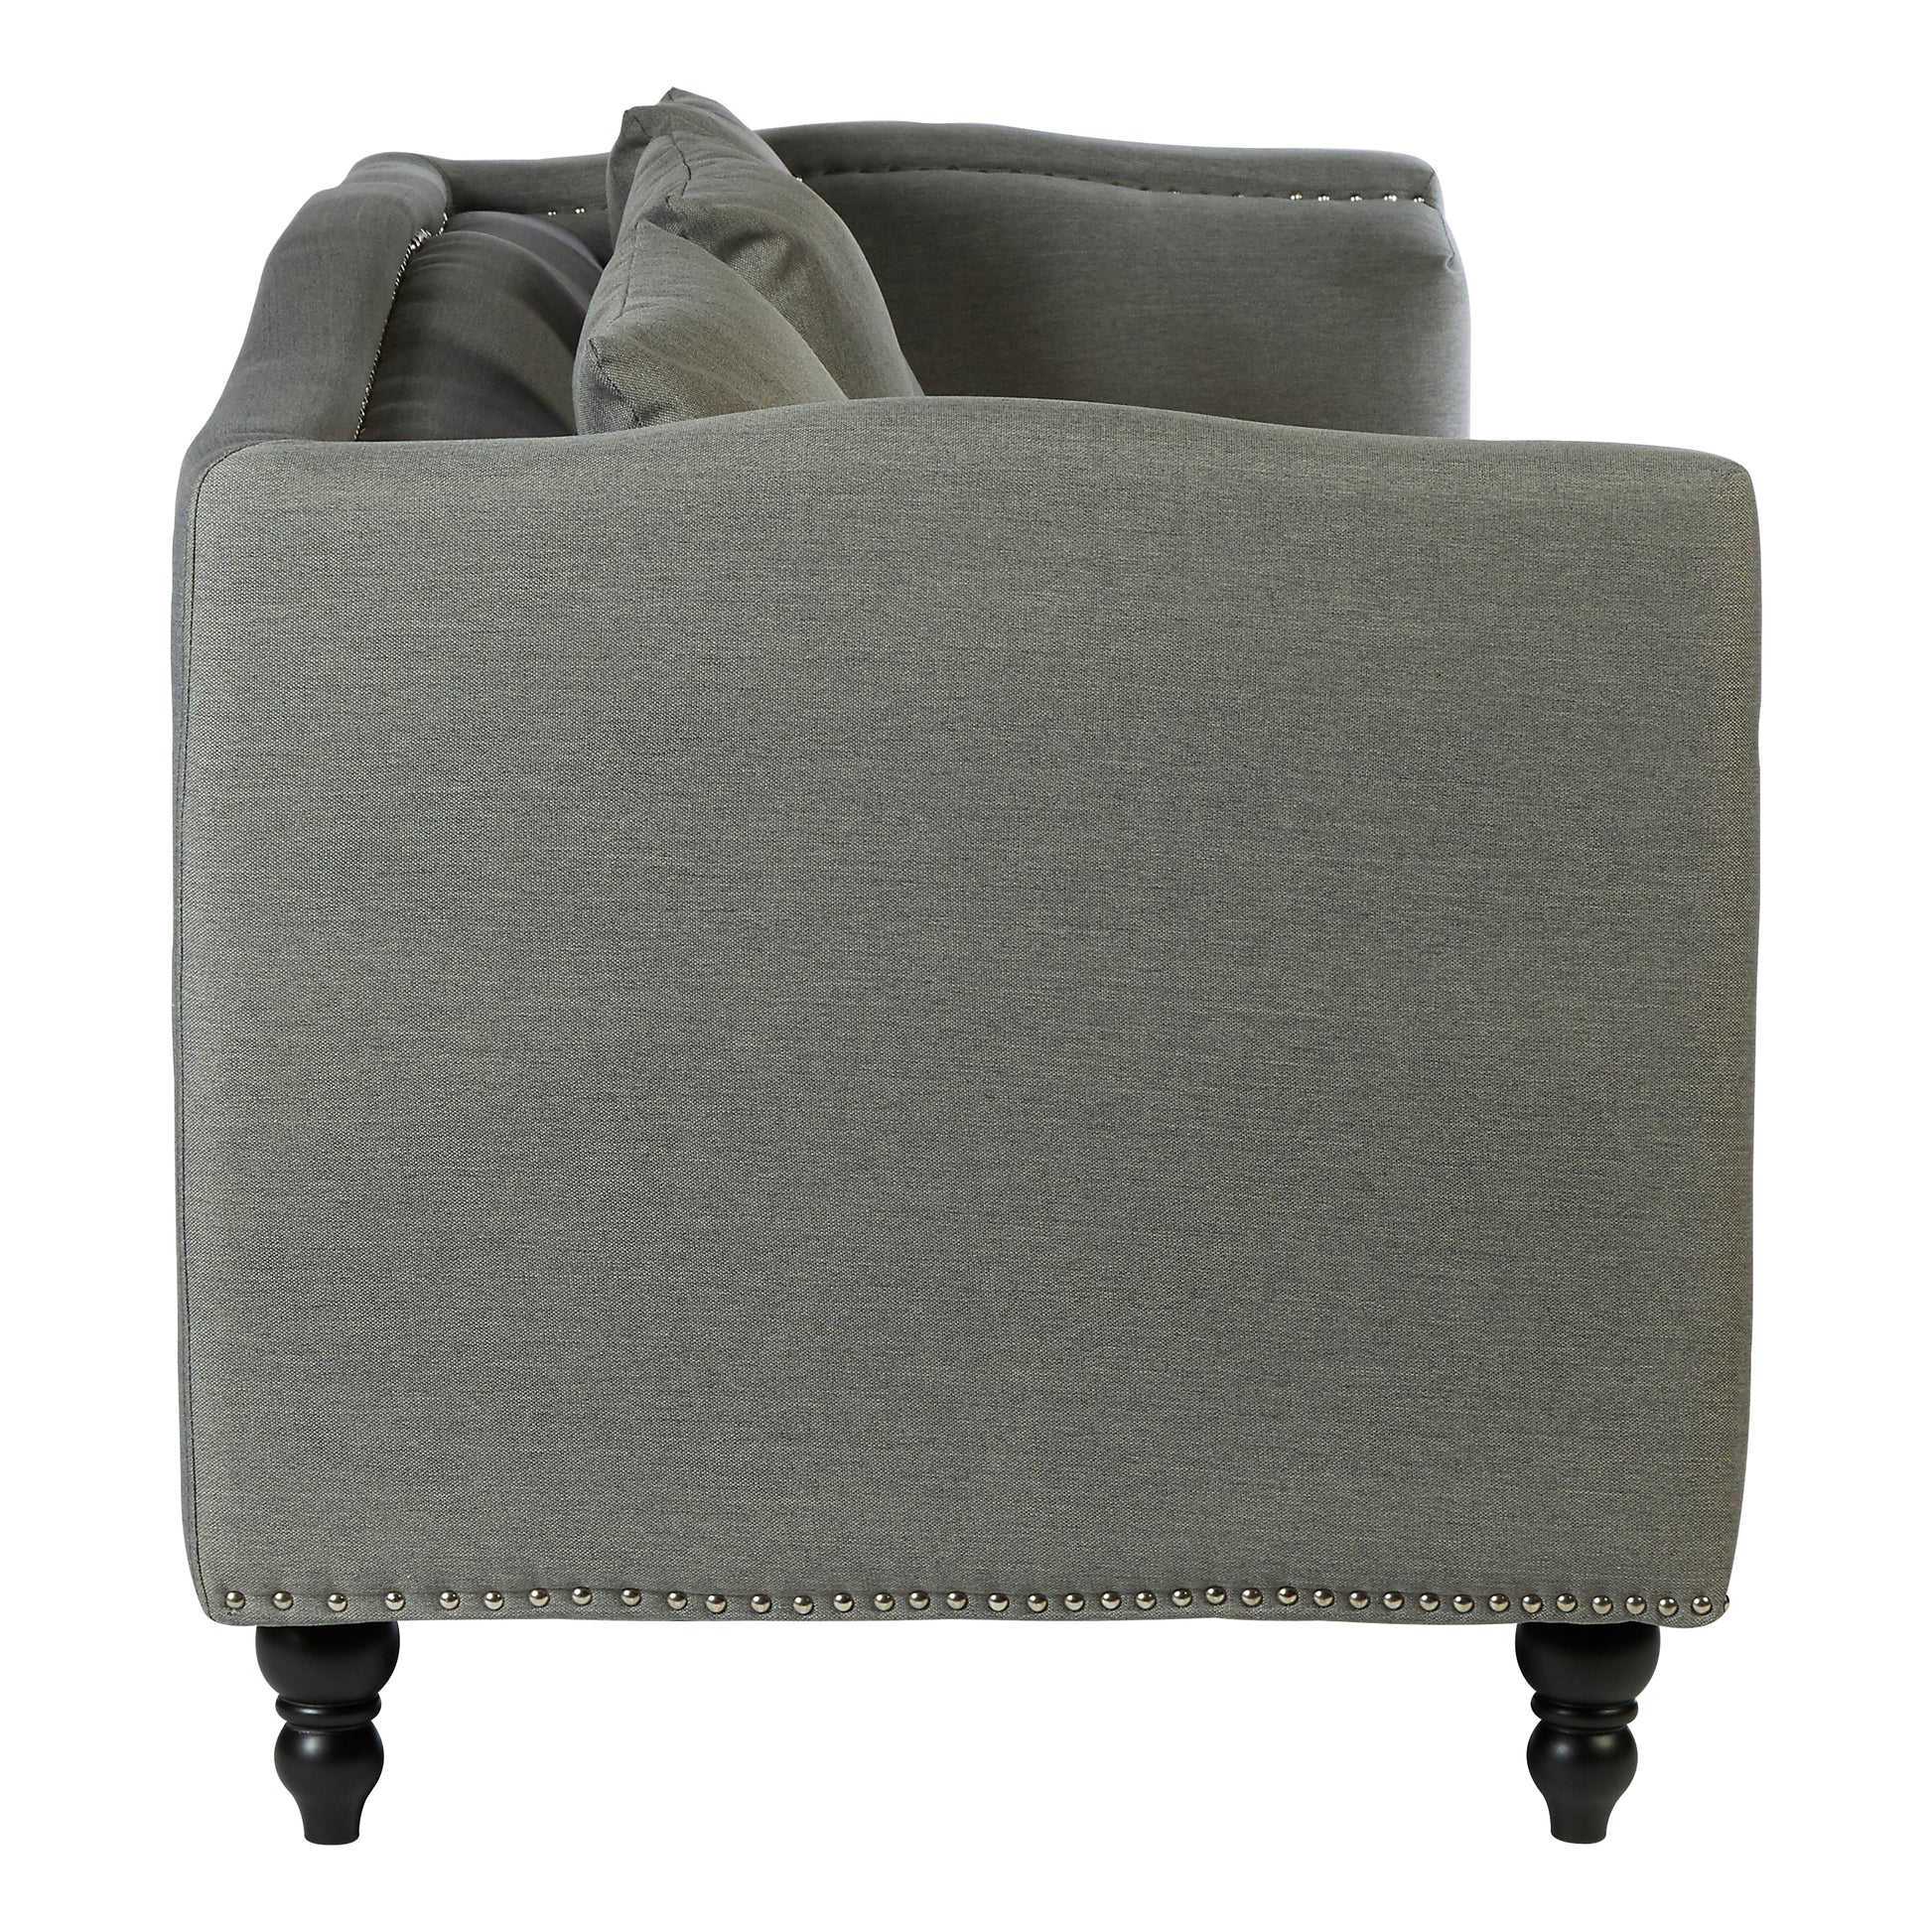 Feya Upholstered Three Seater Grey Fabric Sofa - NIXO Furniture.com